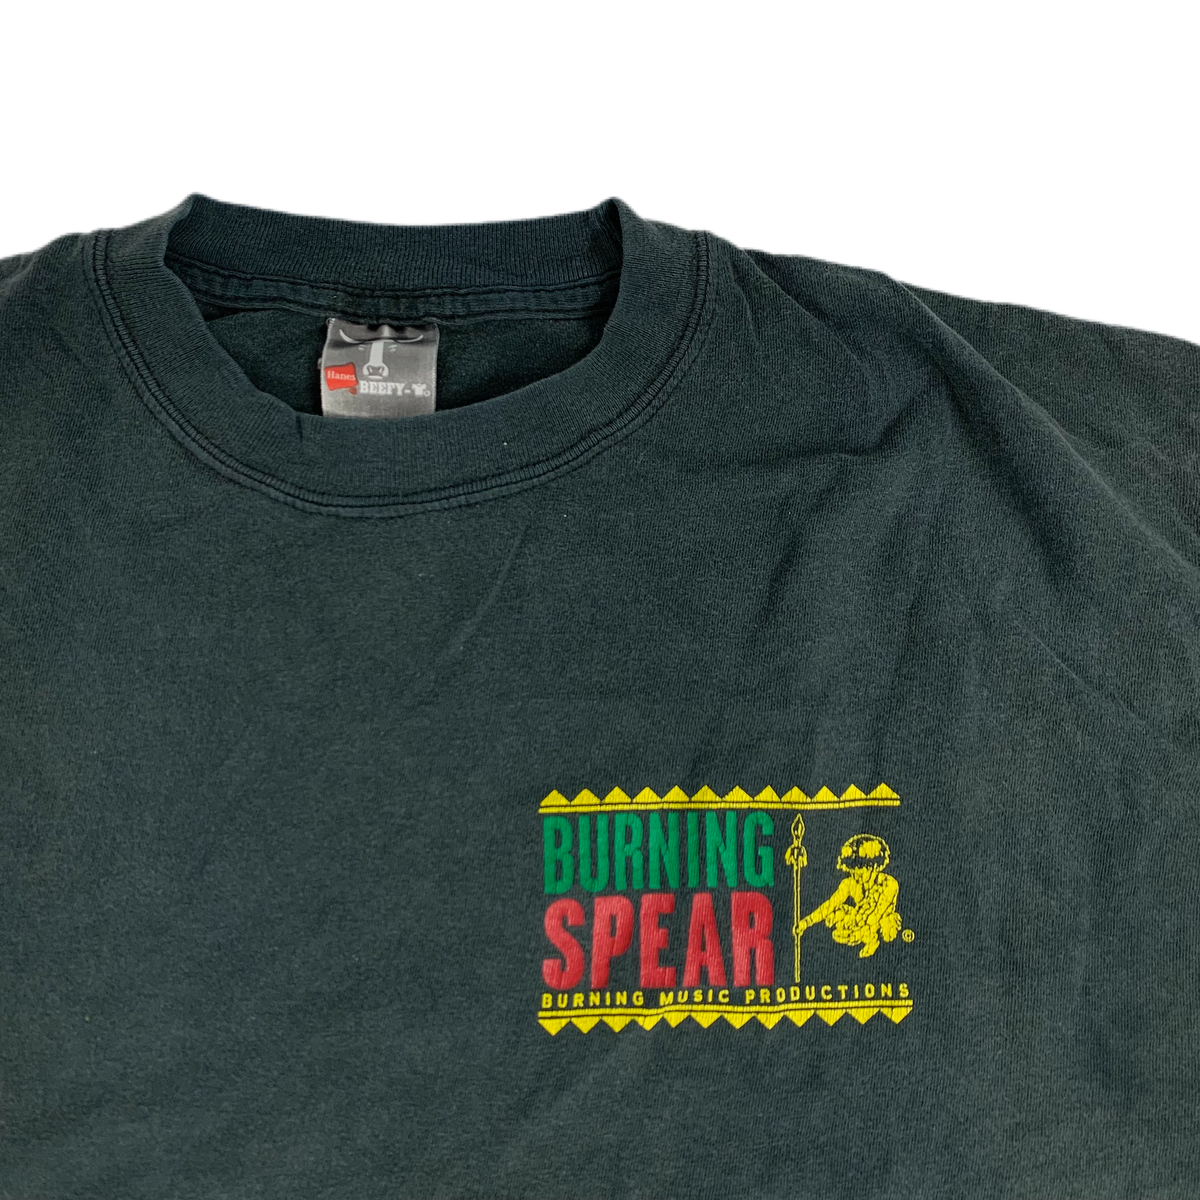 Vintage Burning Spear &quot;Burning Music Productions&quot; T-Shirt